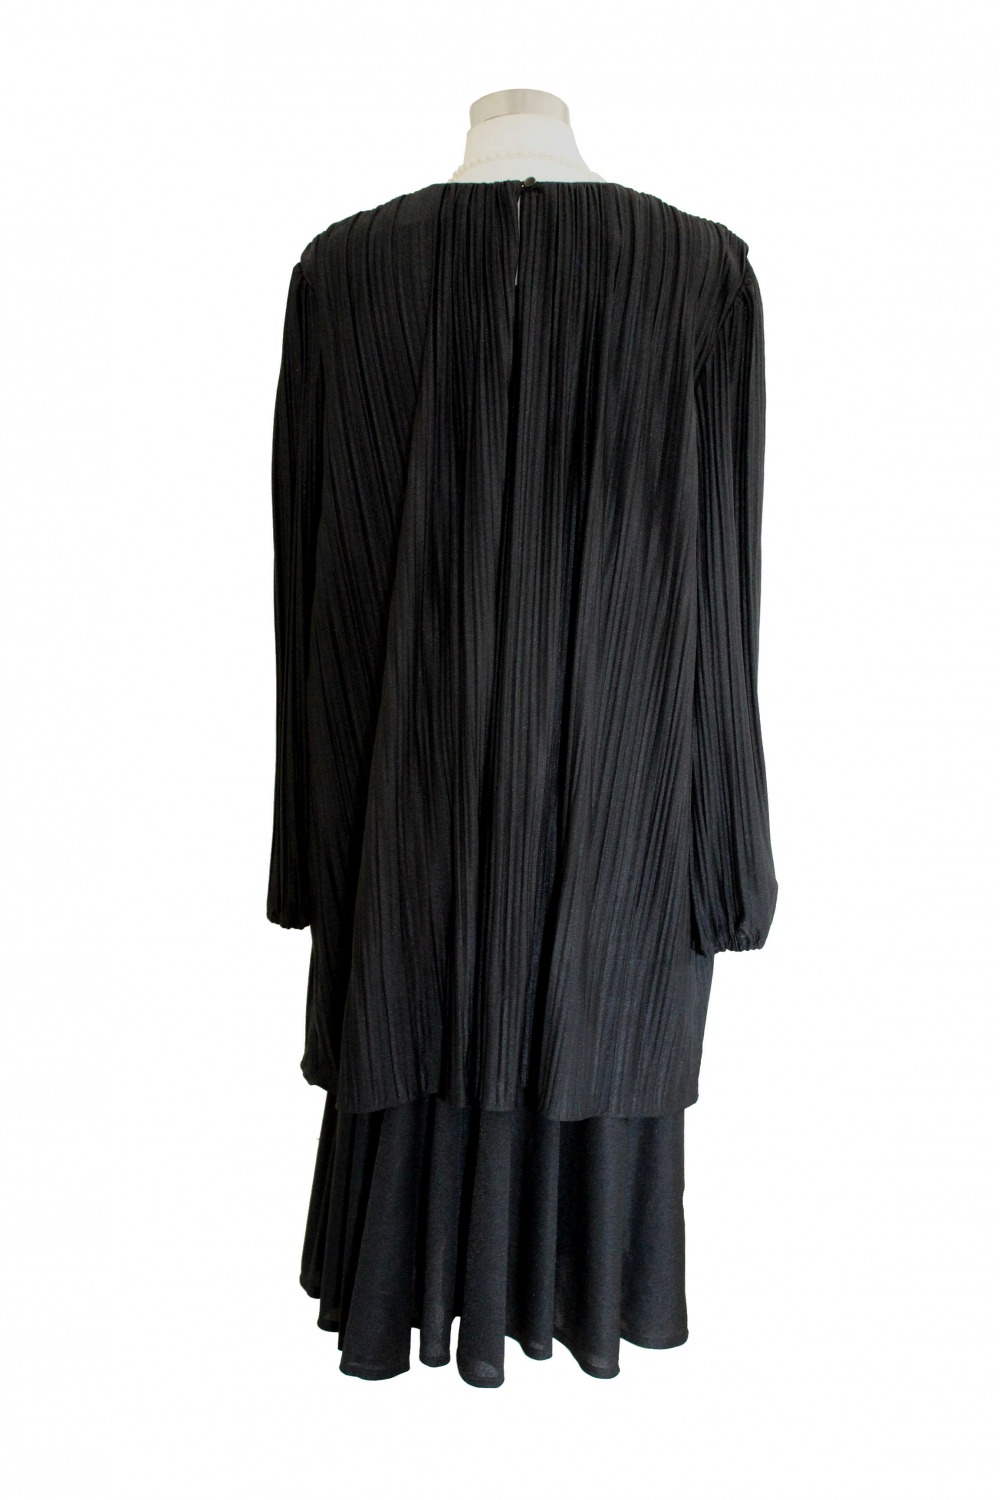 Ladies Edwardian Downton Abbey Day Costume Size 18 - 22 Image